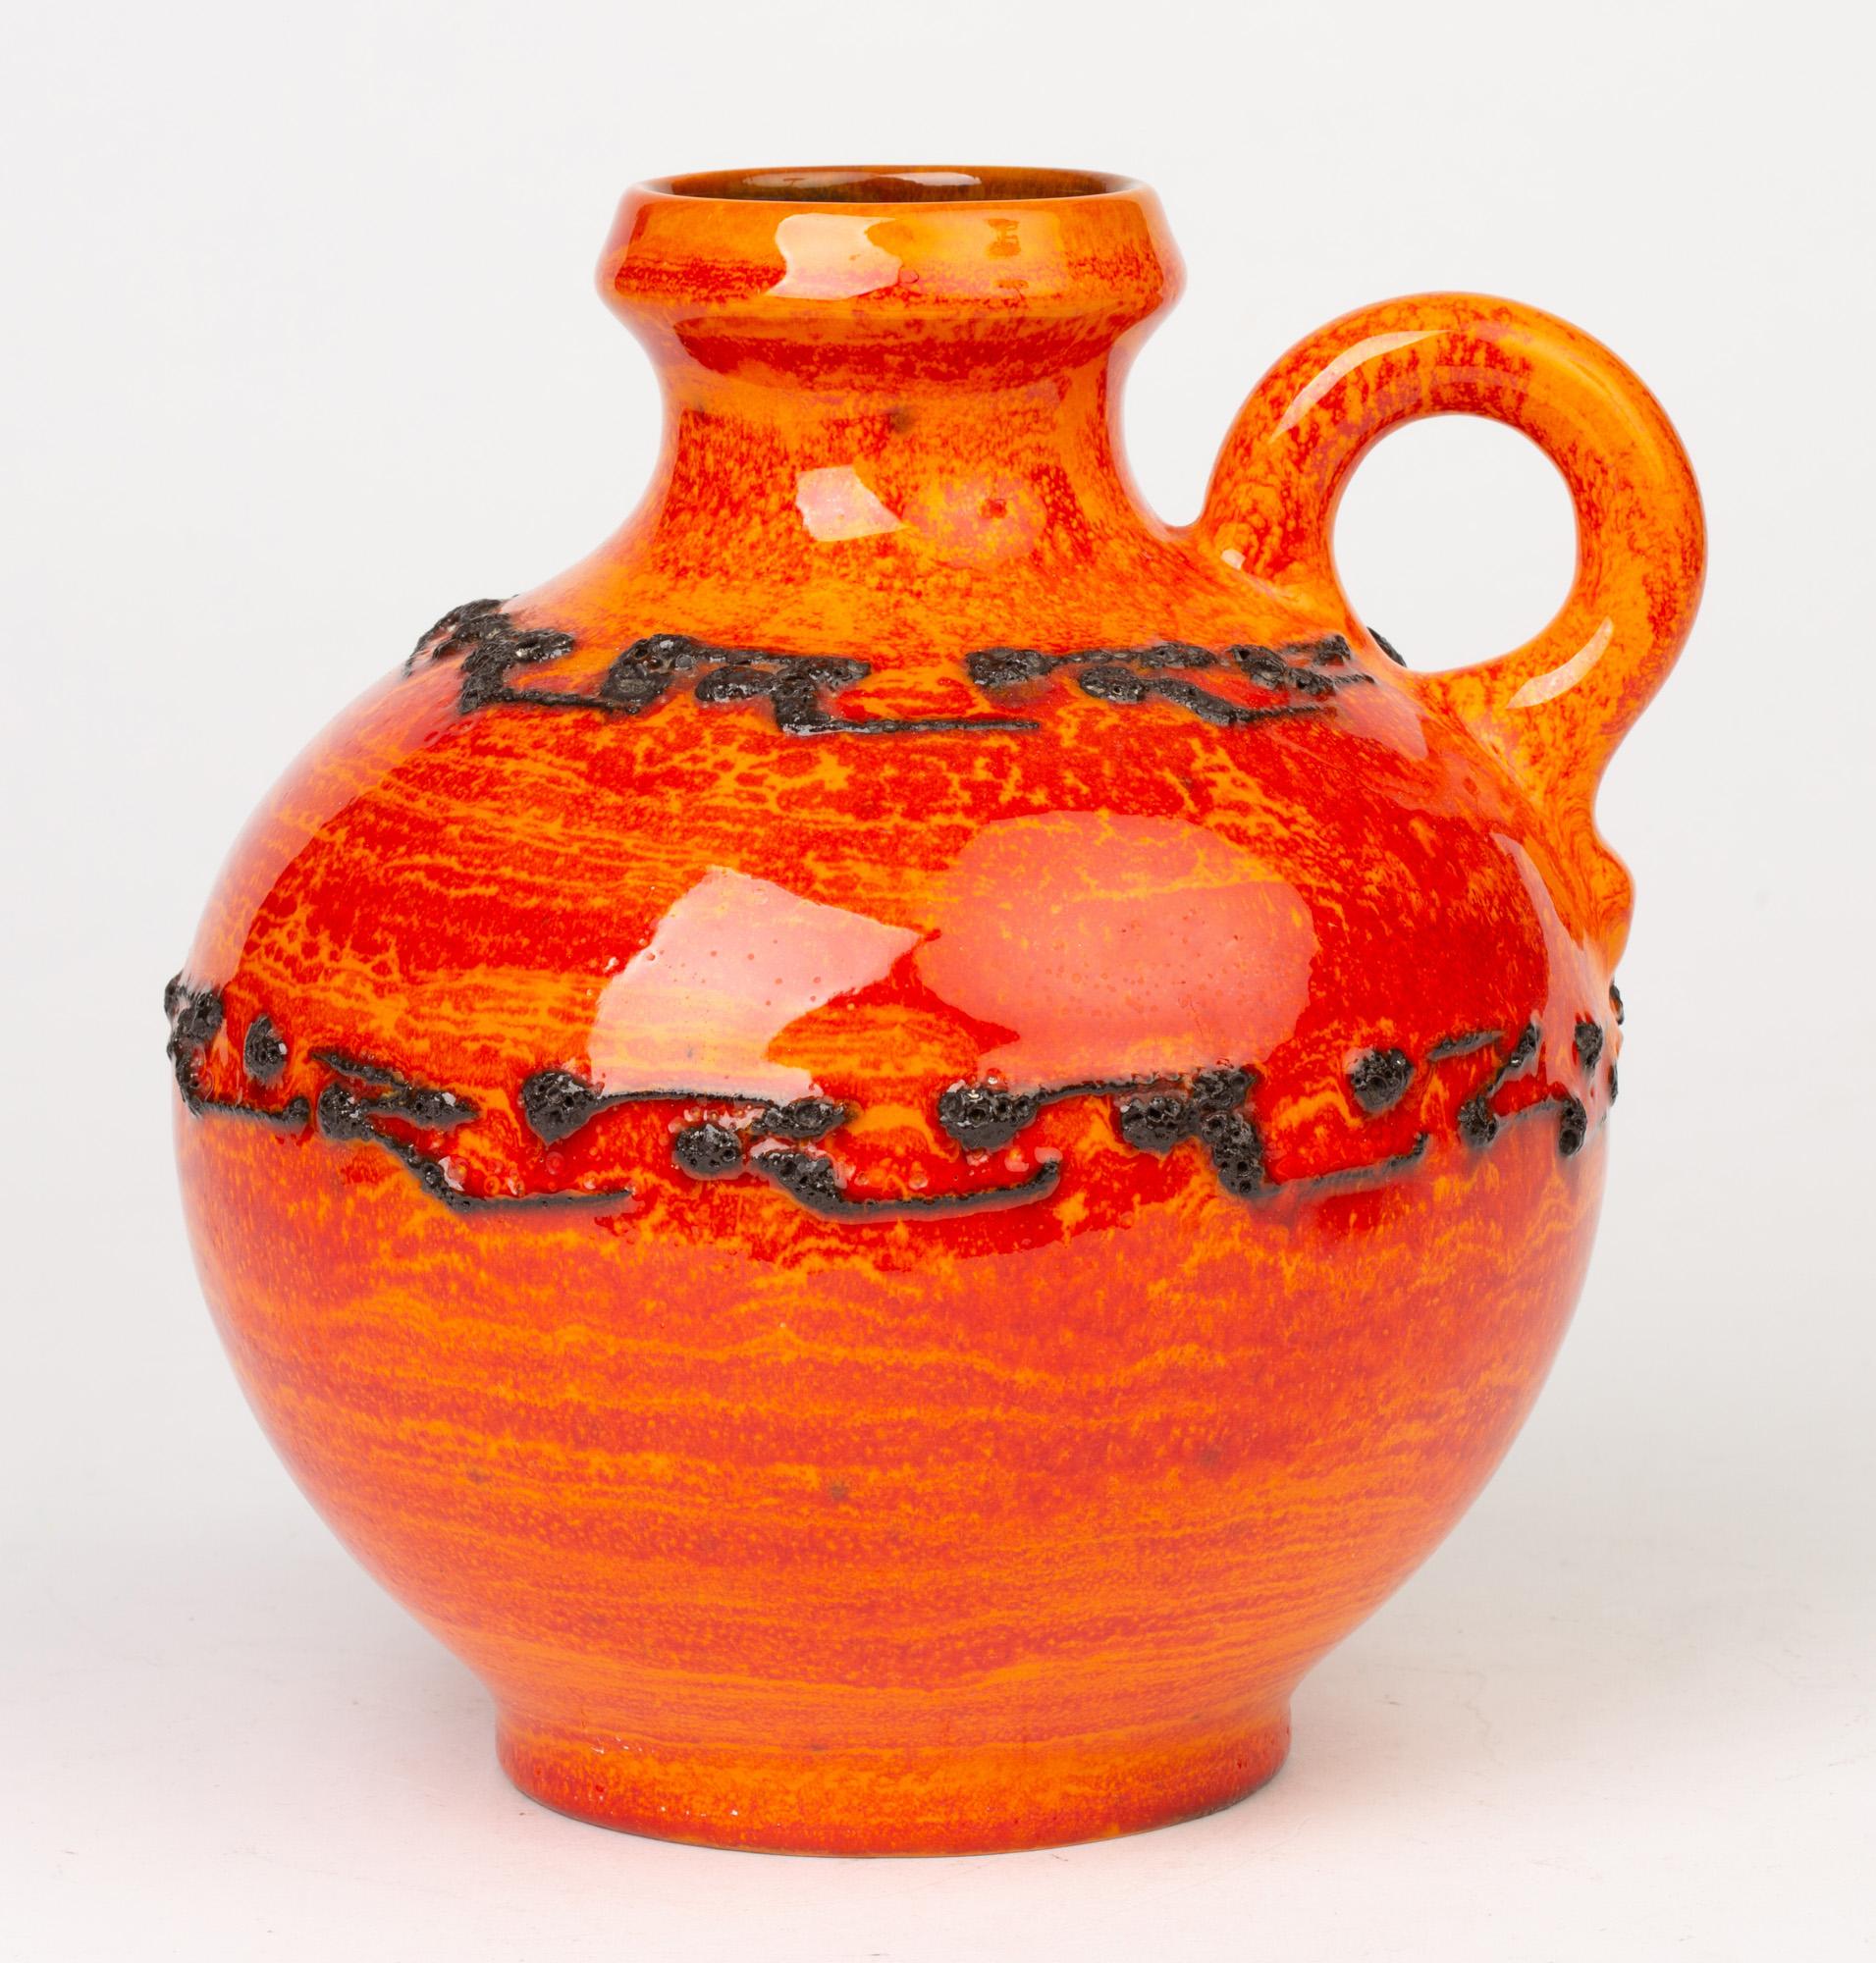 Kreutz Keramik German Midcentury Orange and Red Fat Lava Handled Vase For Sale 3